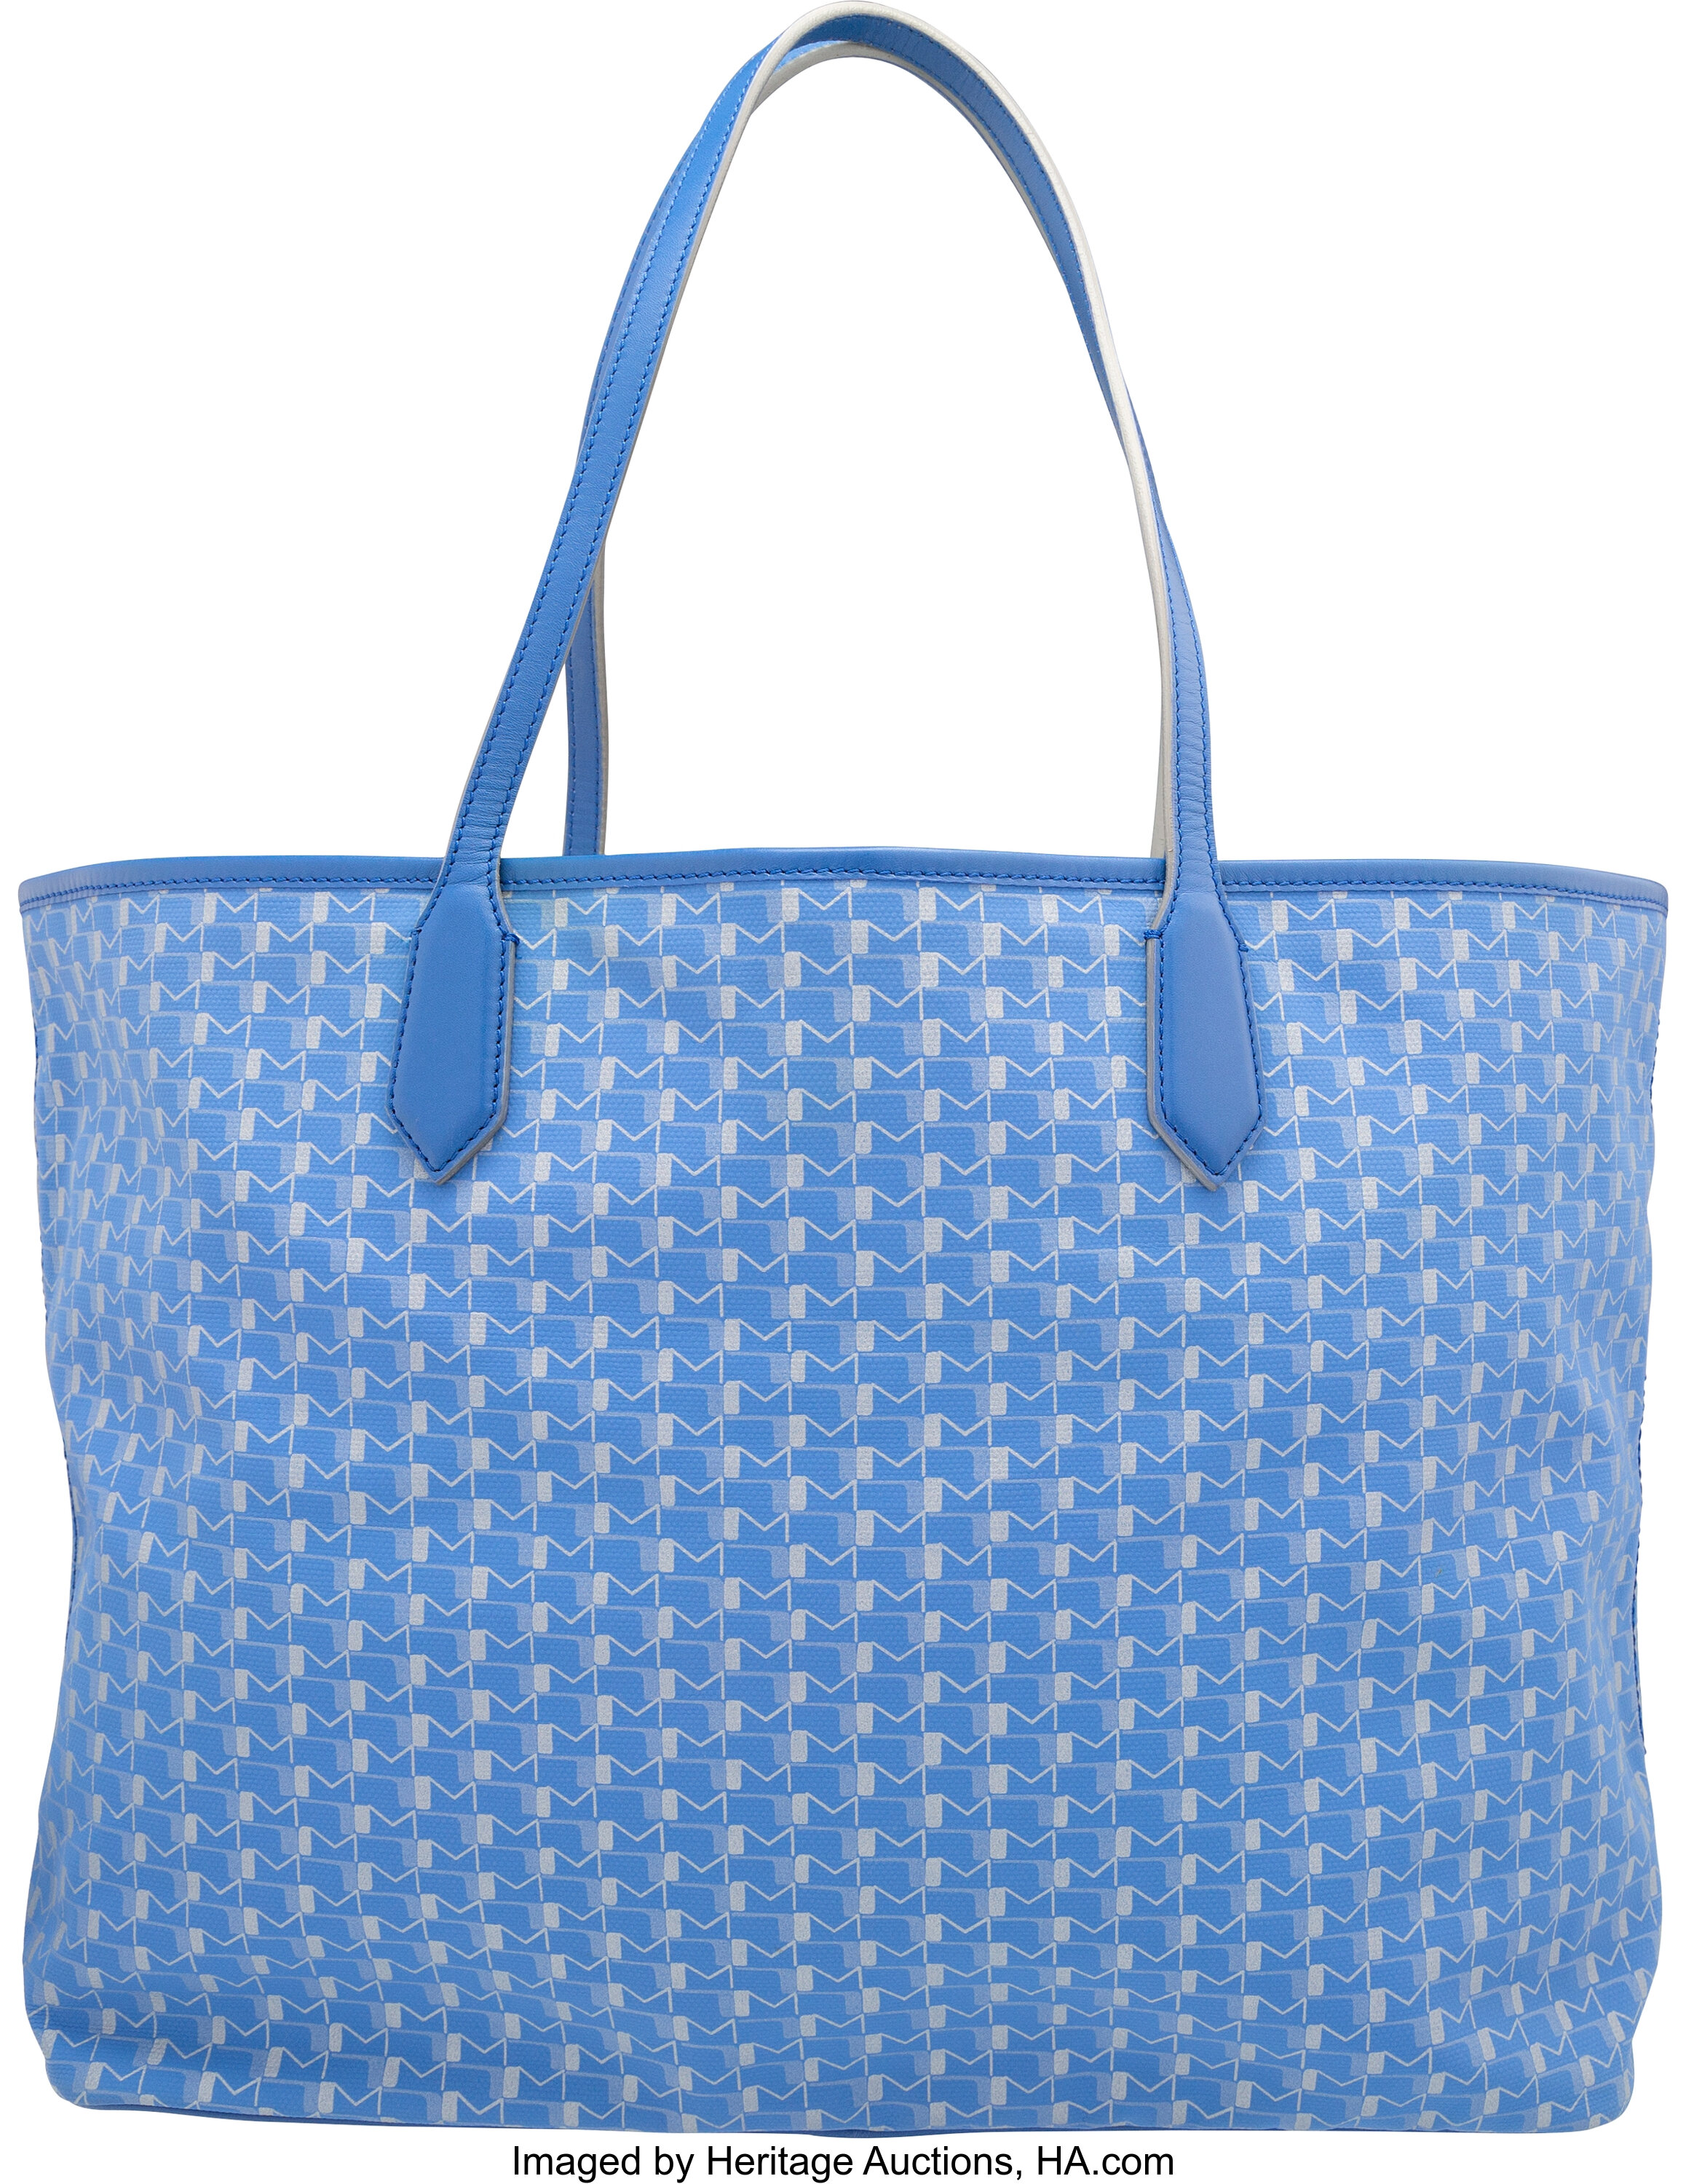 Moynat Blue Monogram Canvas Cabas Tote Bag. Excellent Condition